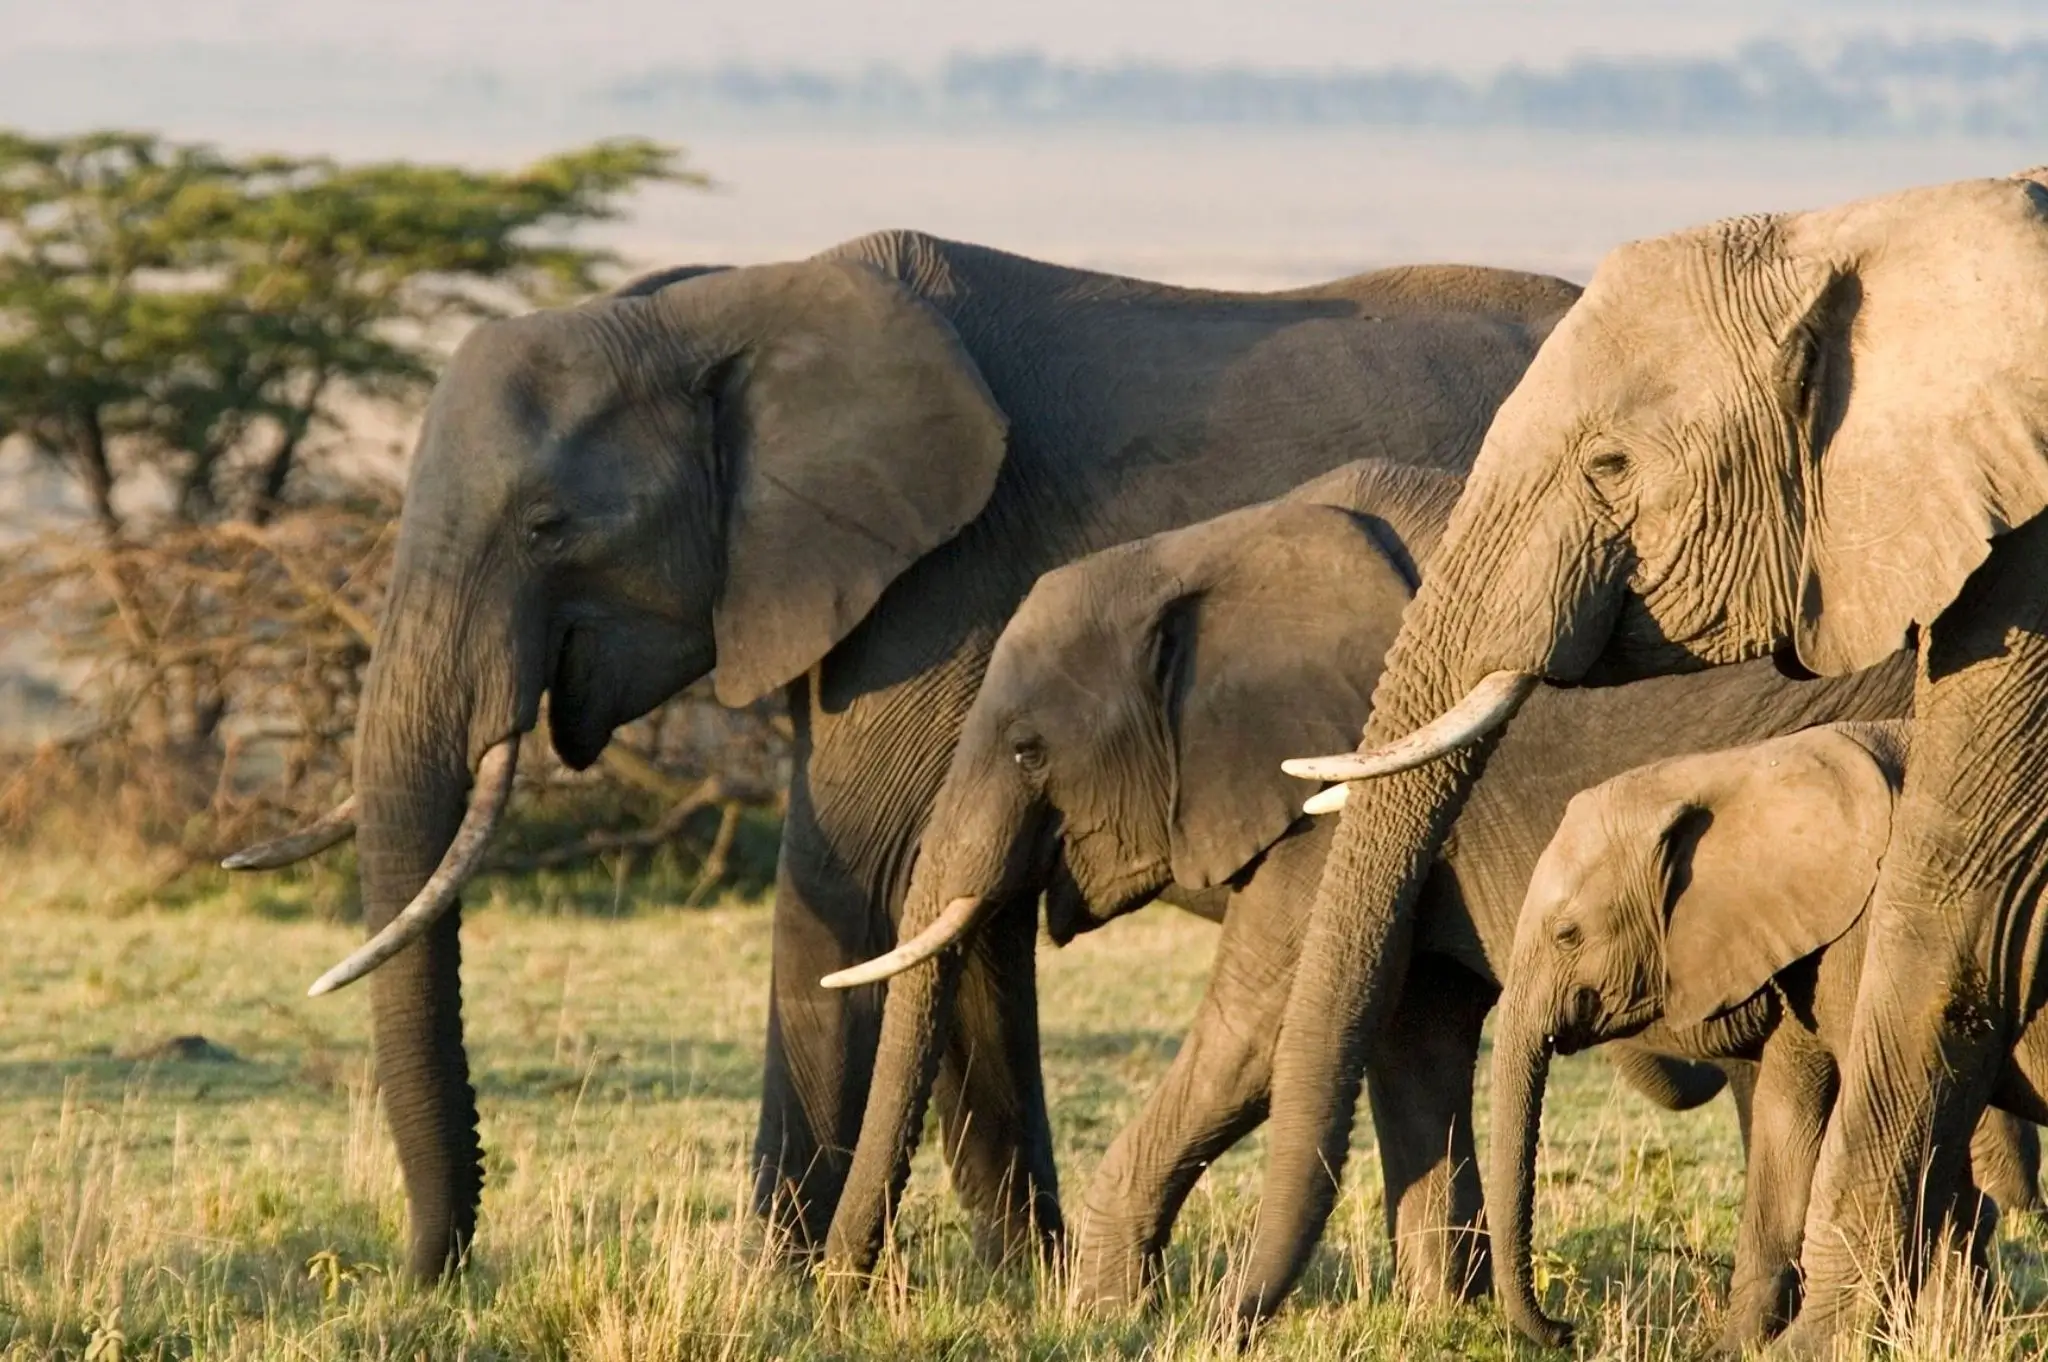 A Herd of Elephants roaming in safari jungle of Tanzania